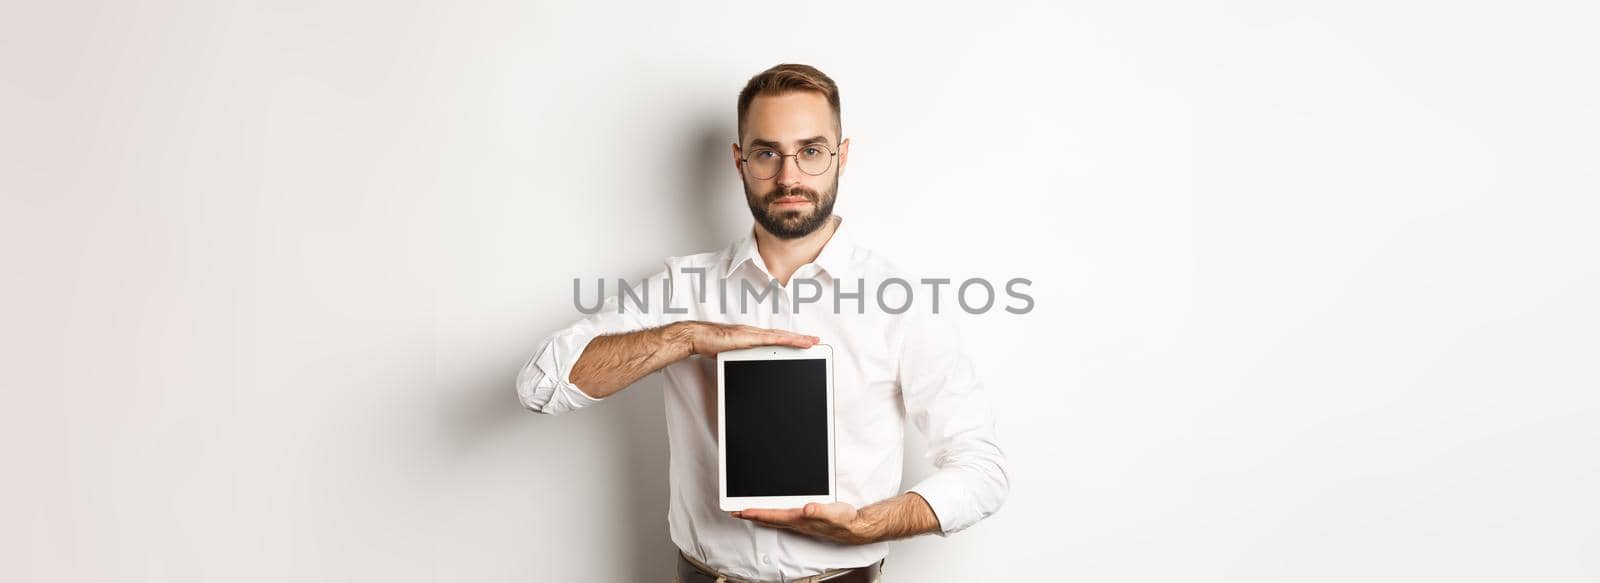 Confident bearded man showing digital tablet screen, demonstrating app, standing over white background.